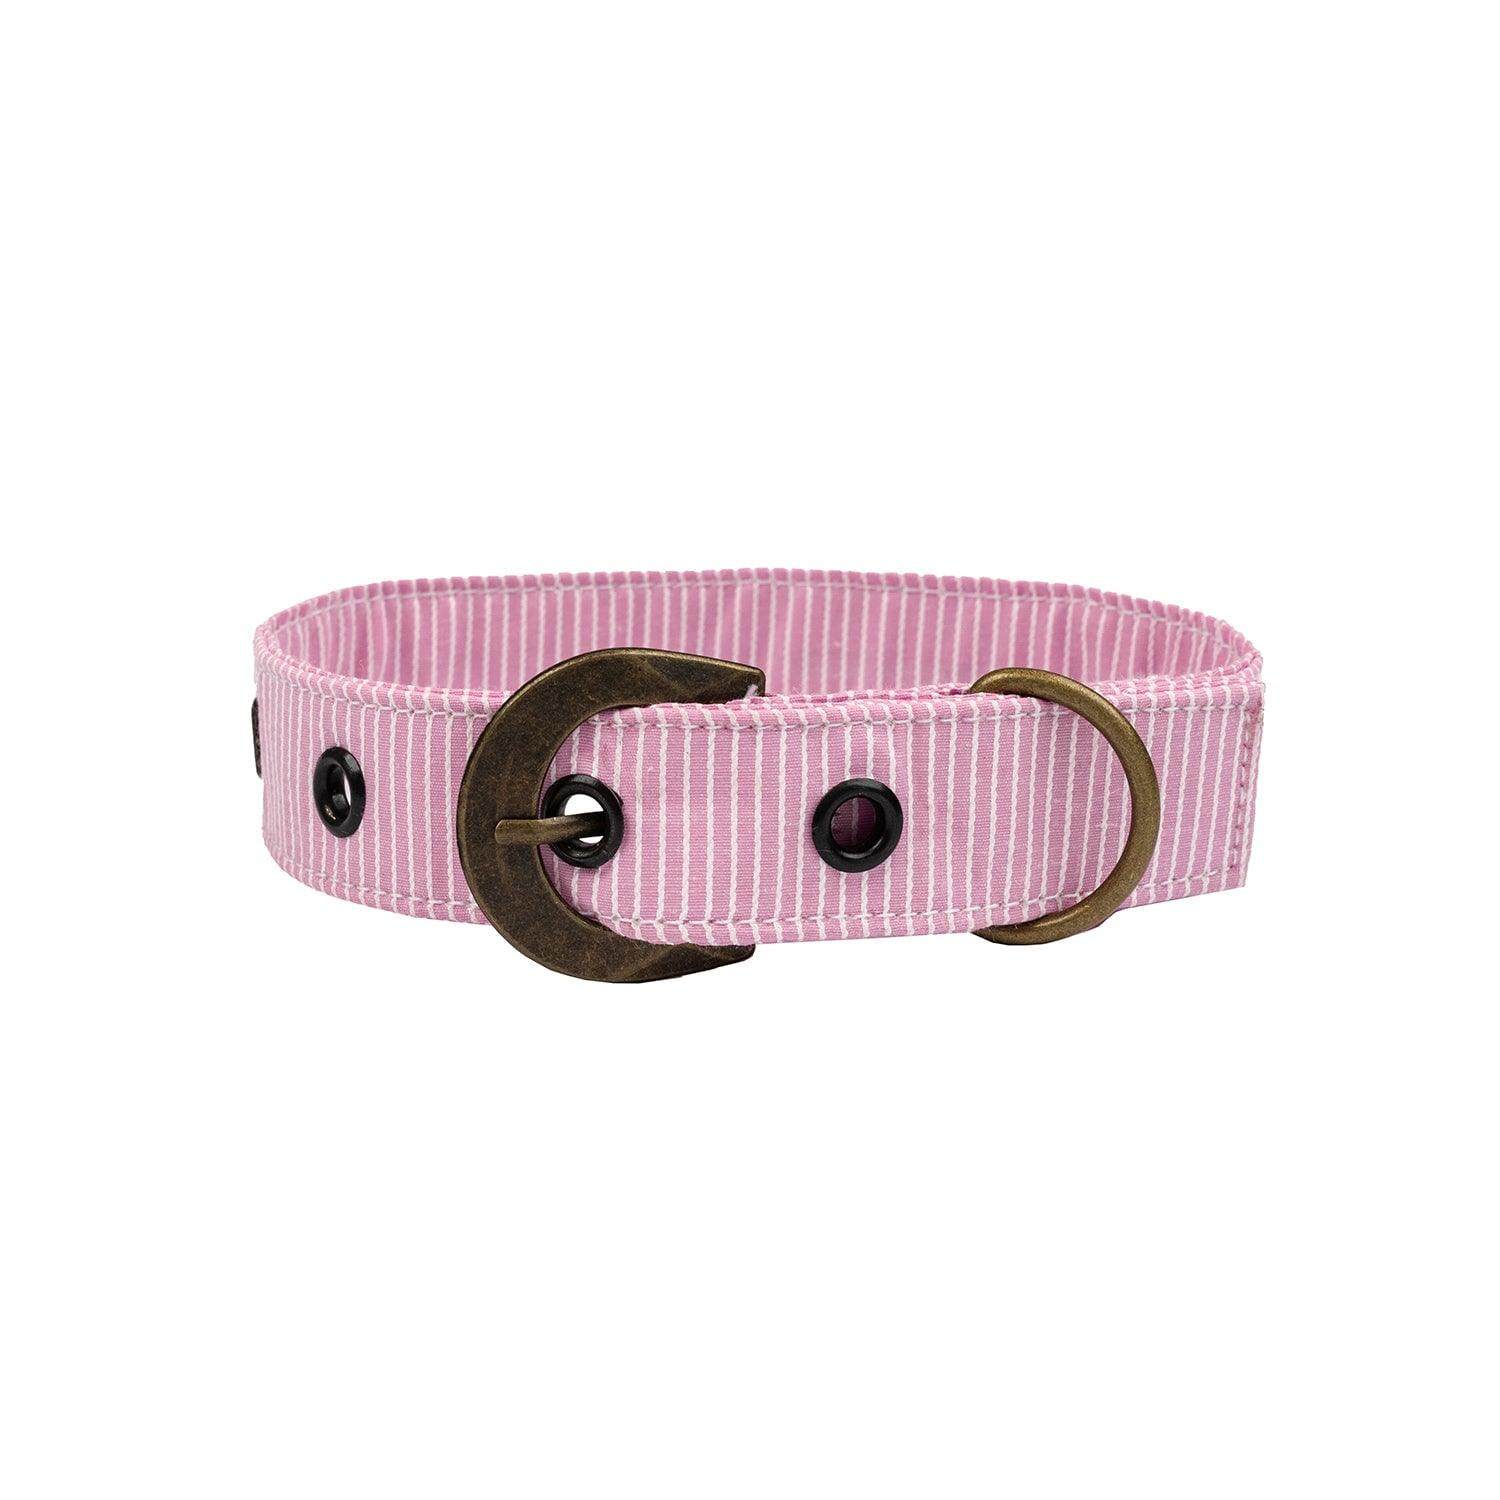 White Leather Dog Collar + Leash kit, designer fashion monogram pet collar.